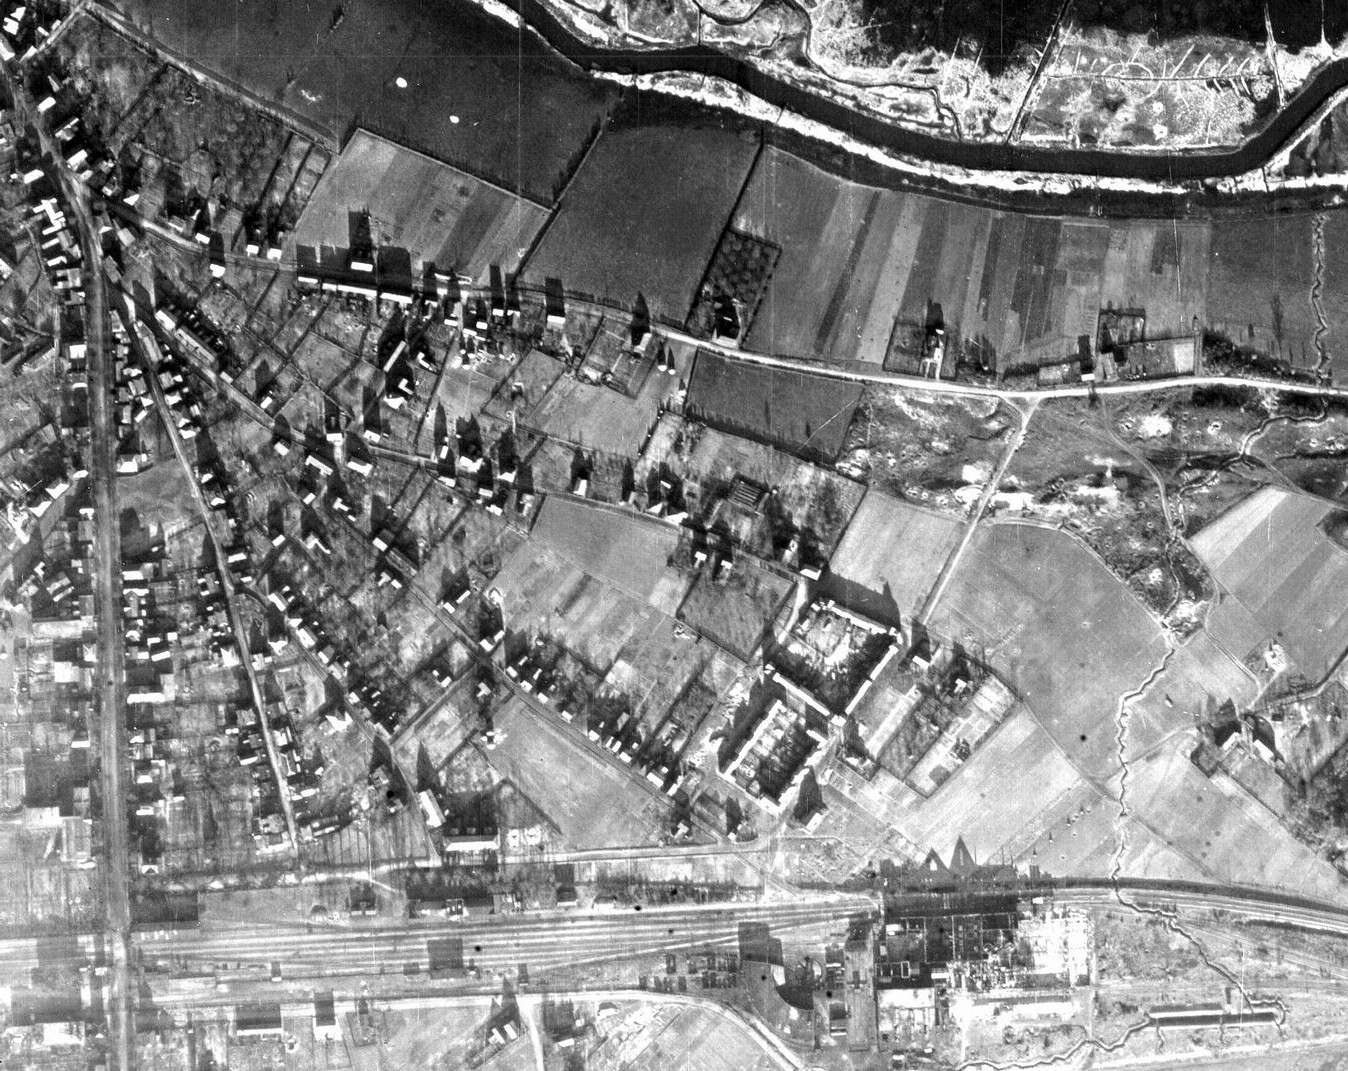 gennep spoorstraat-vogelbuurt op 31 dec 1944.jpg